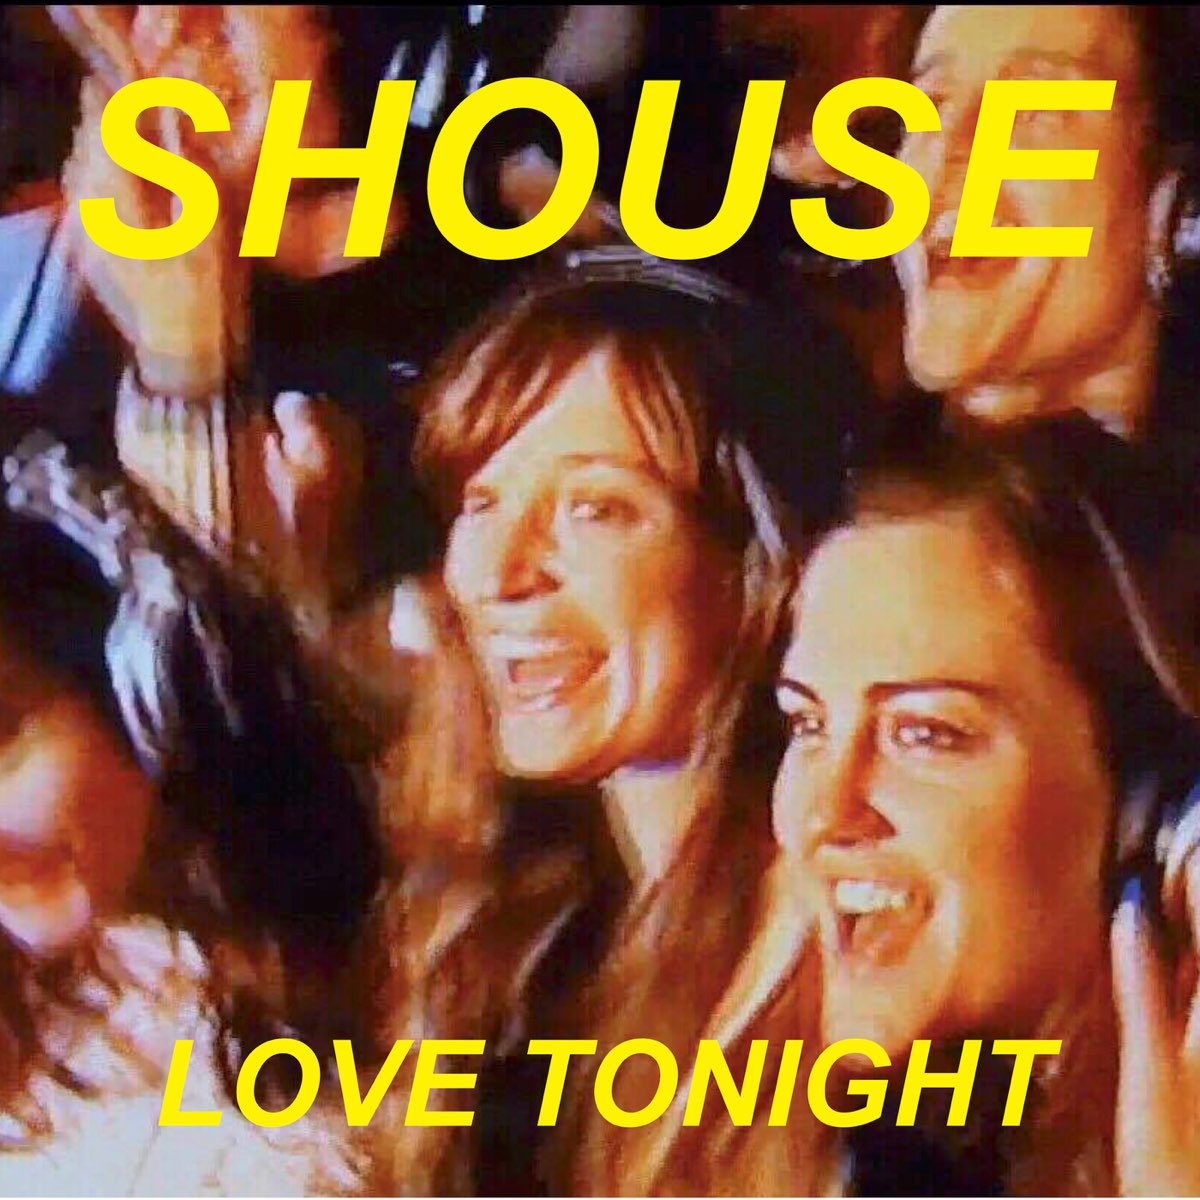 Shouse love remix. Shouse Love Tonight. Shouse Love Tonight 2021. Shouse дуэт Австралия. Shouse — Love Tonight Мем.